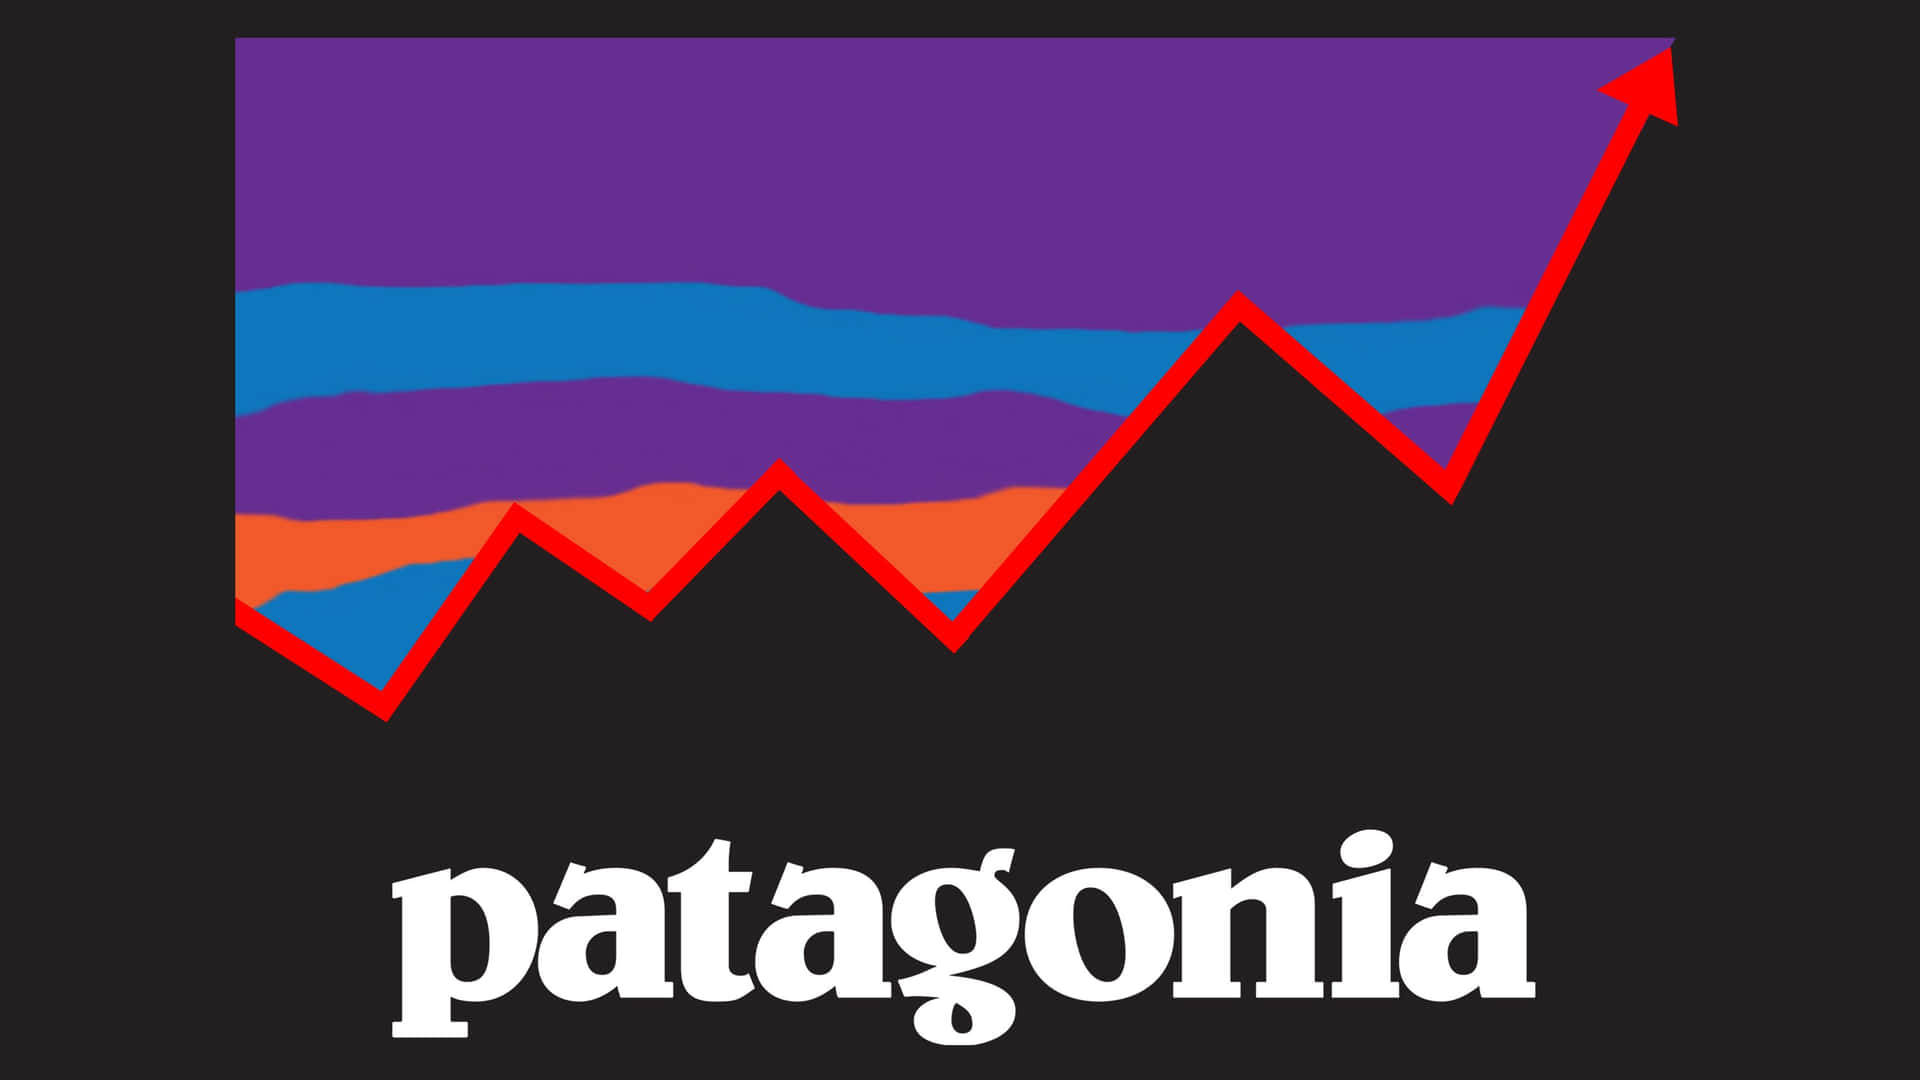 Marvel at the Wonderland of Patagonia